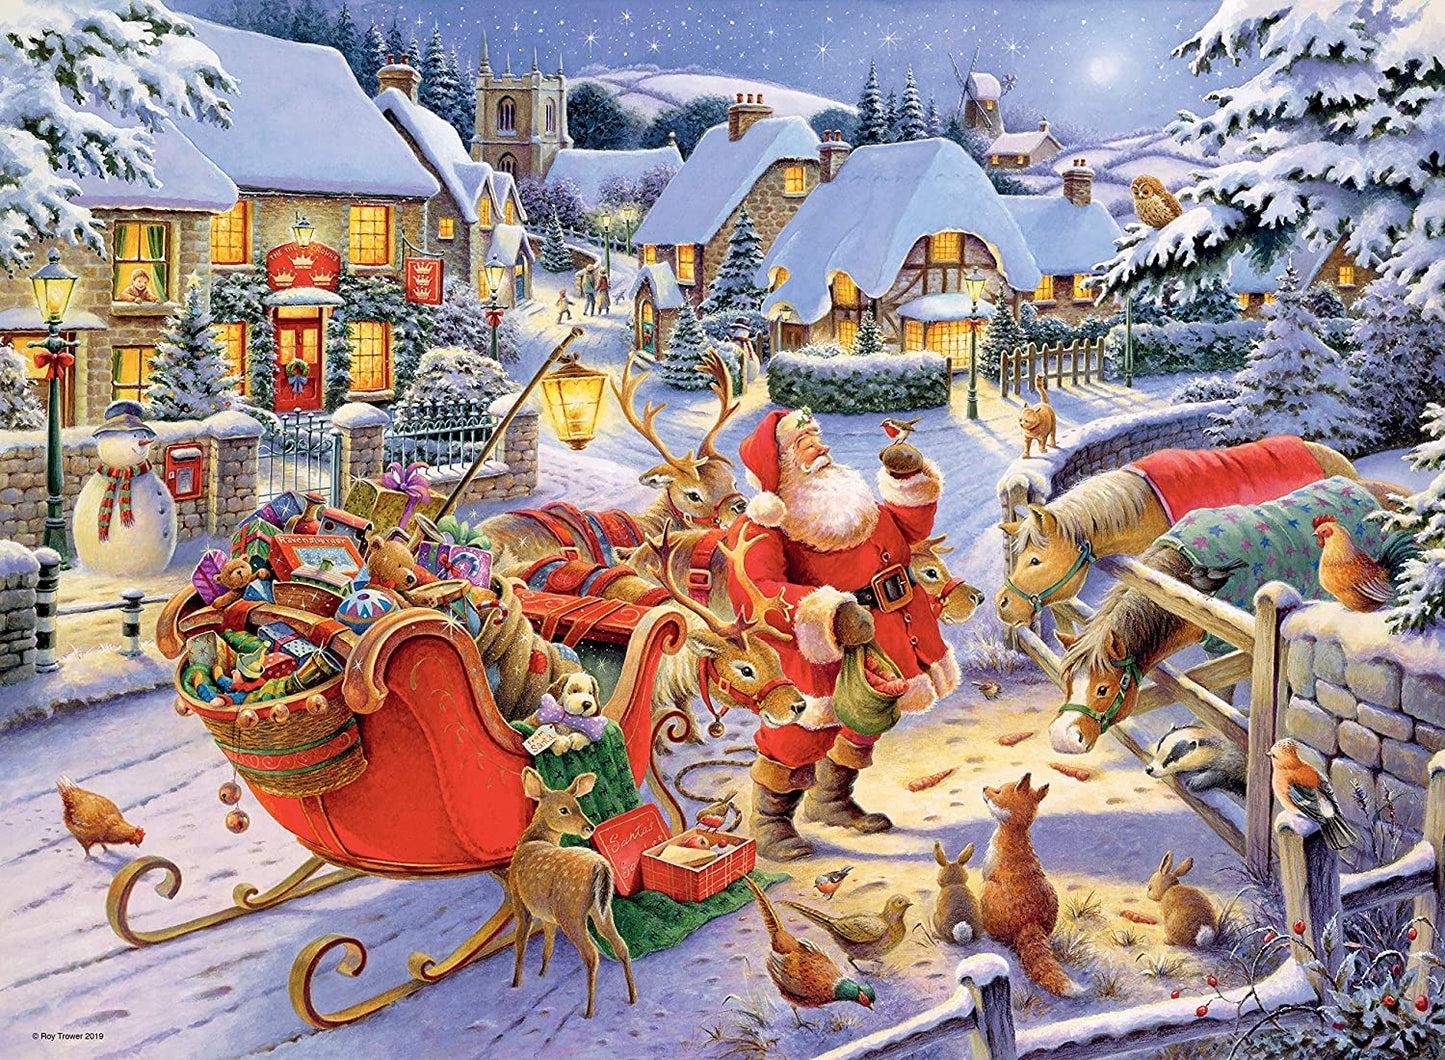 Ravensburger Christmas Collection No.1 - Market & Santa?s Christmas Supper - 2x 500 Piece Jigsaw Puzzles